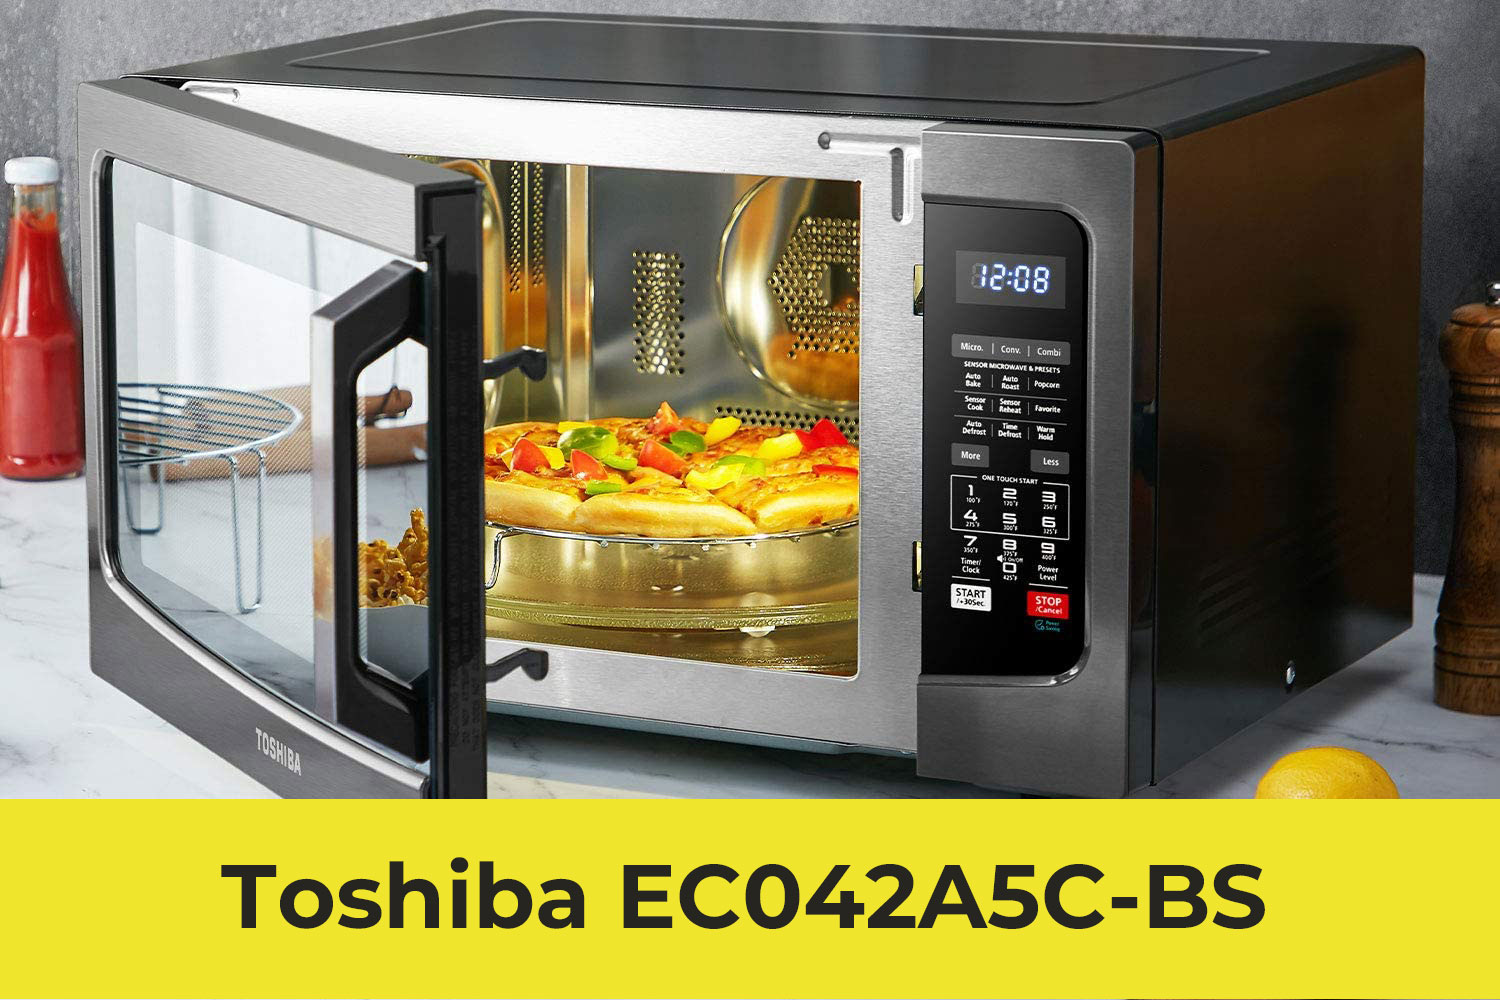 Toshiba EC042A5C-BS Countertop Microwave Oven